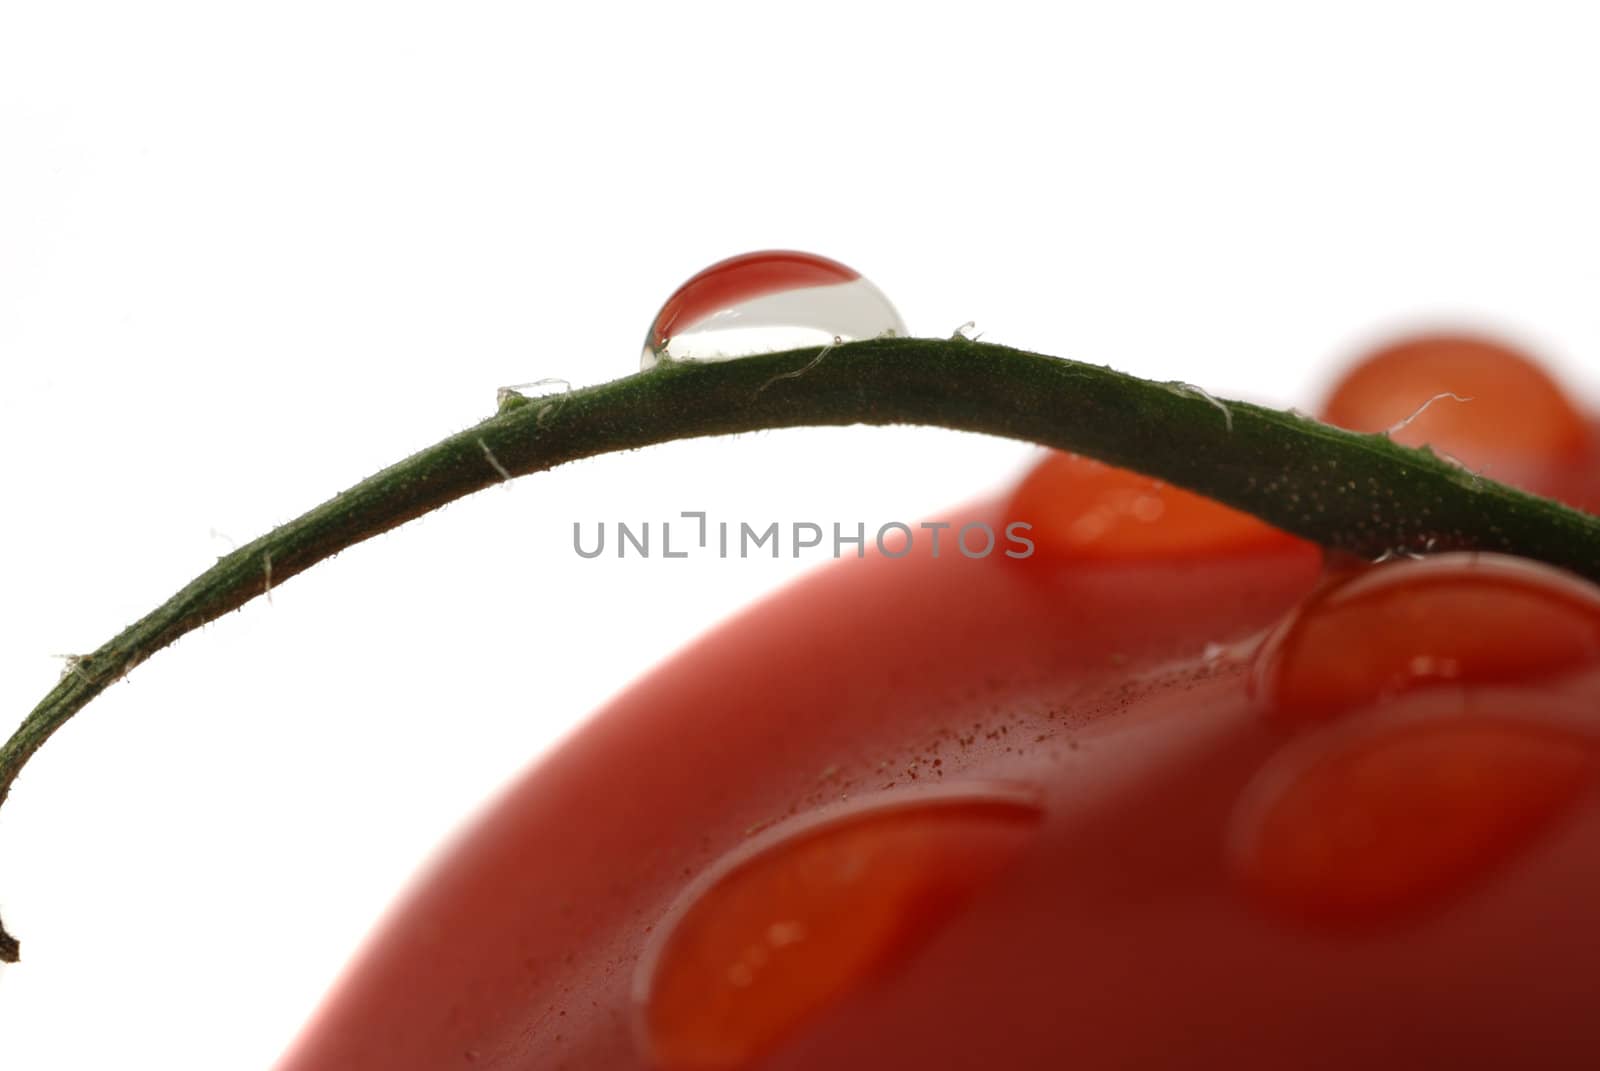 TomatoTomato and drop macro photo